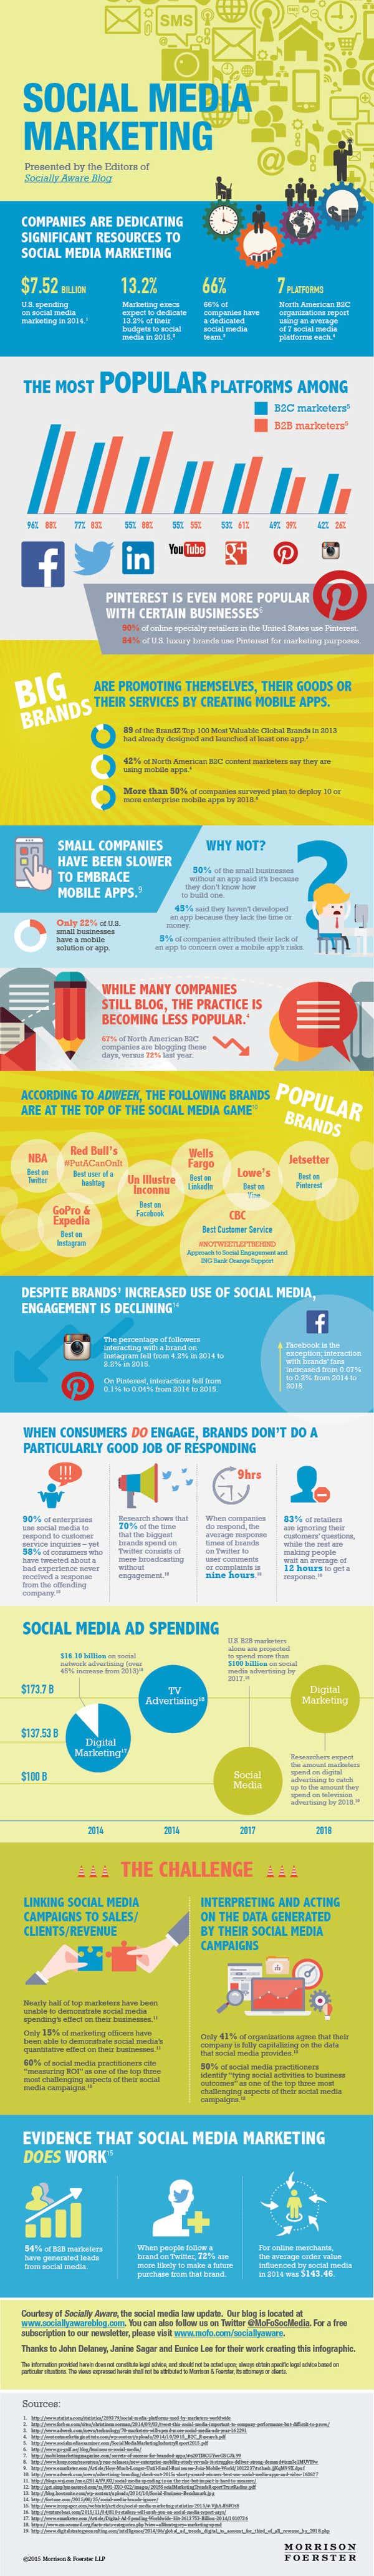 Infographic: Social Media Marketing